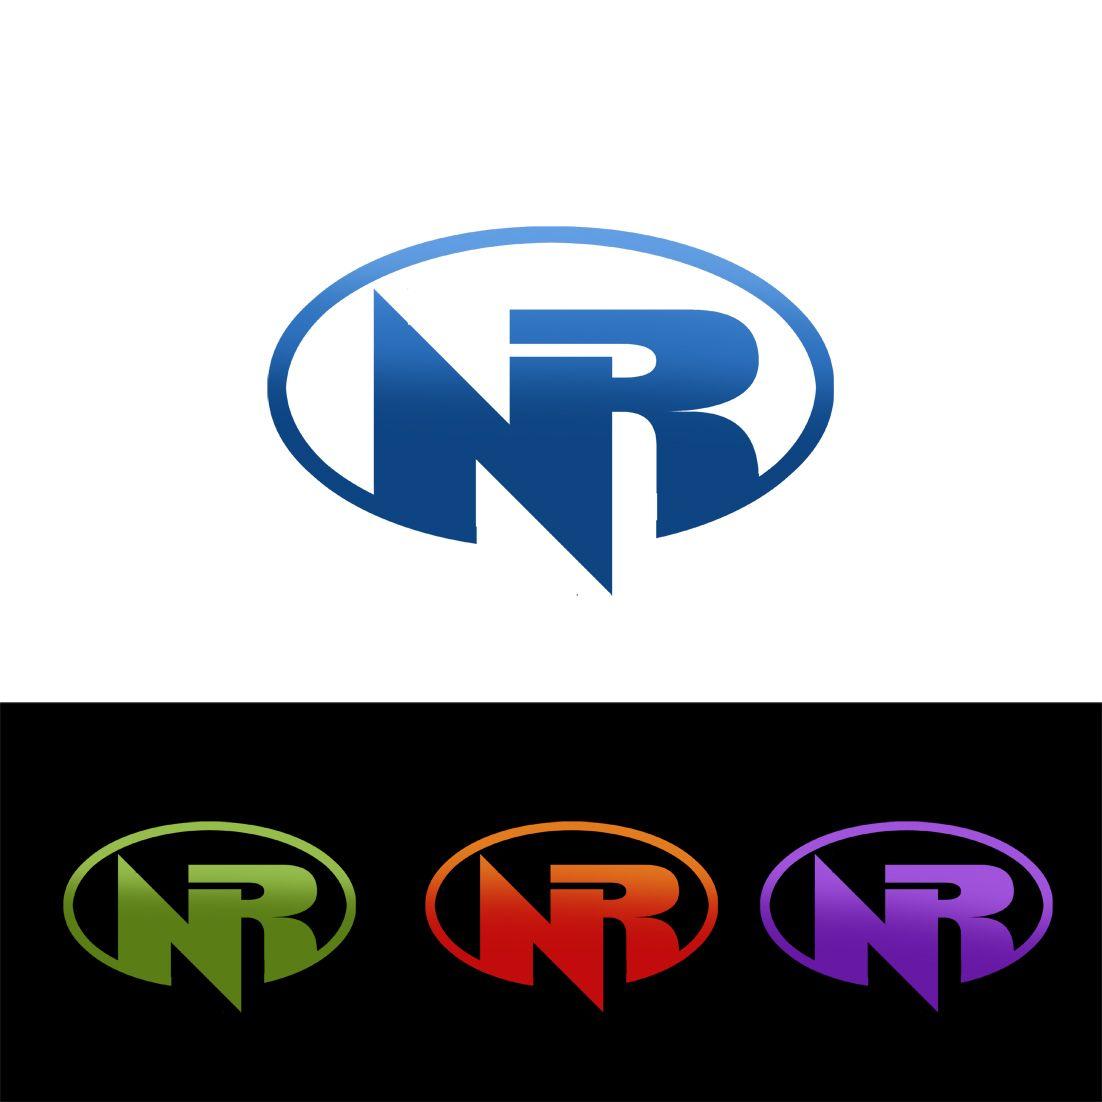 Nr Logo - Modern, Professional, Business Logo Design for NR or NetRescue